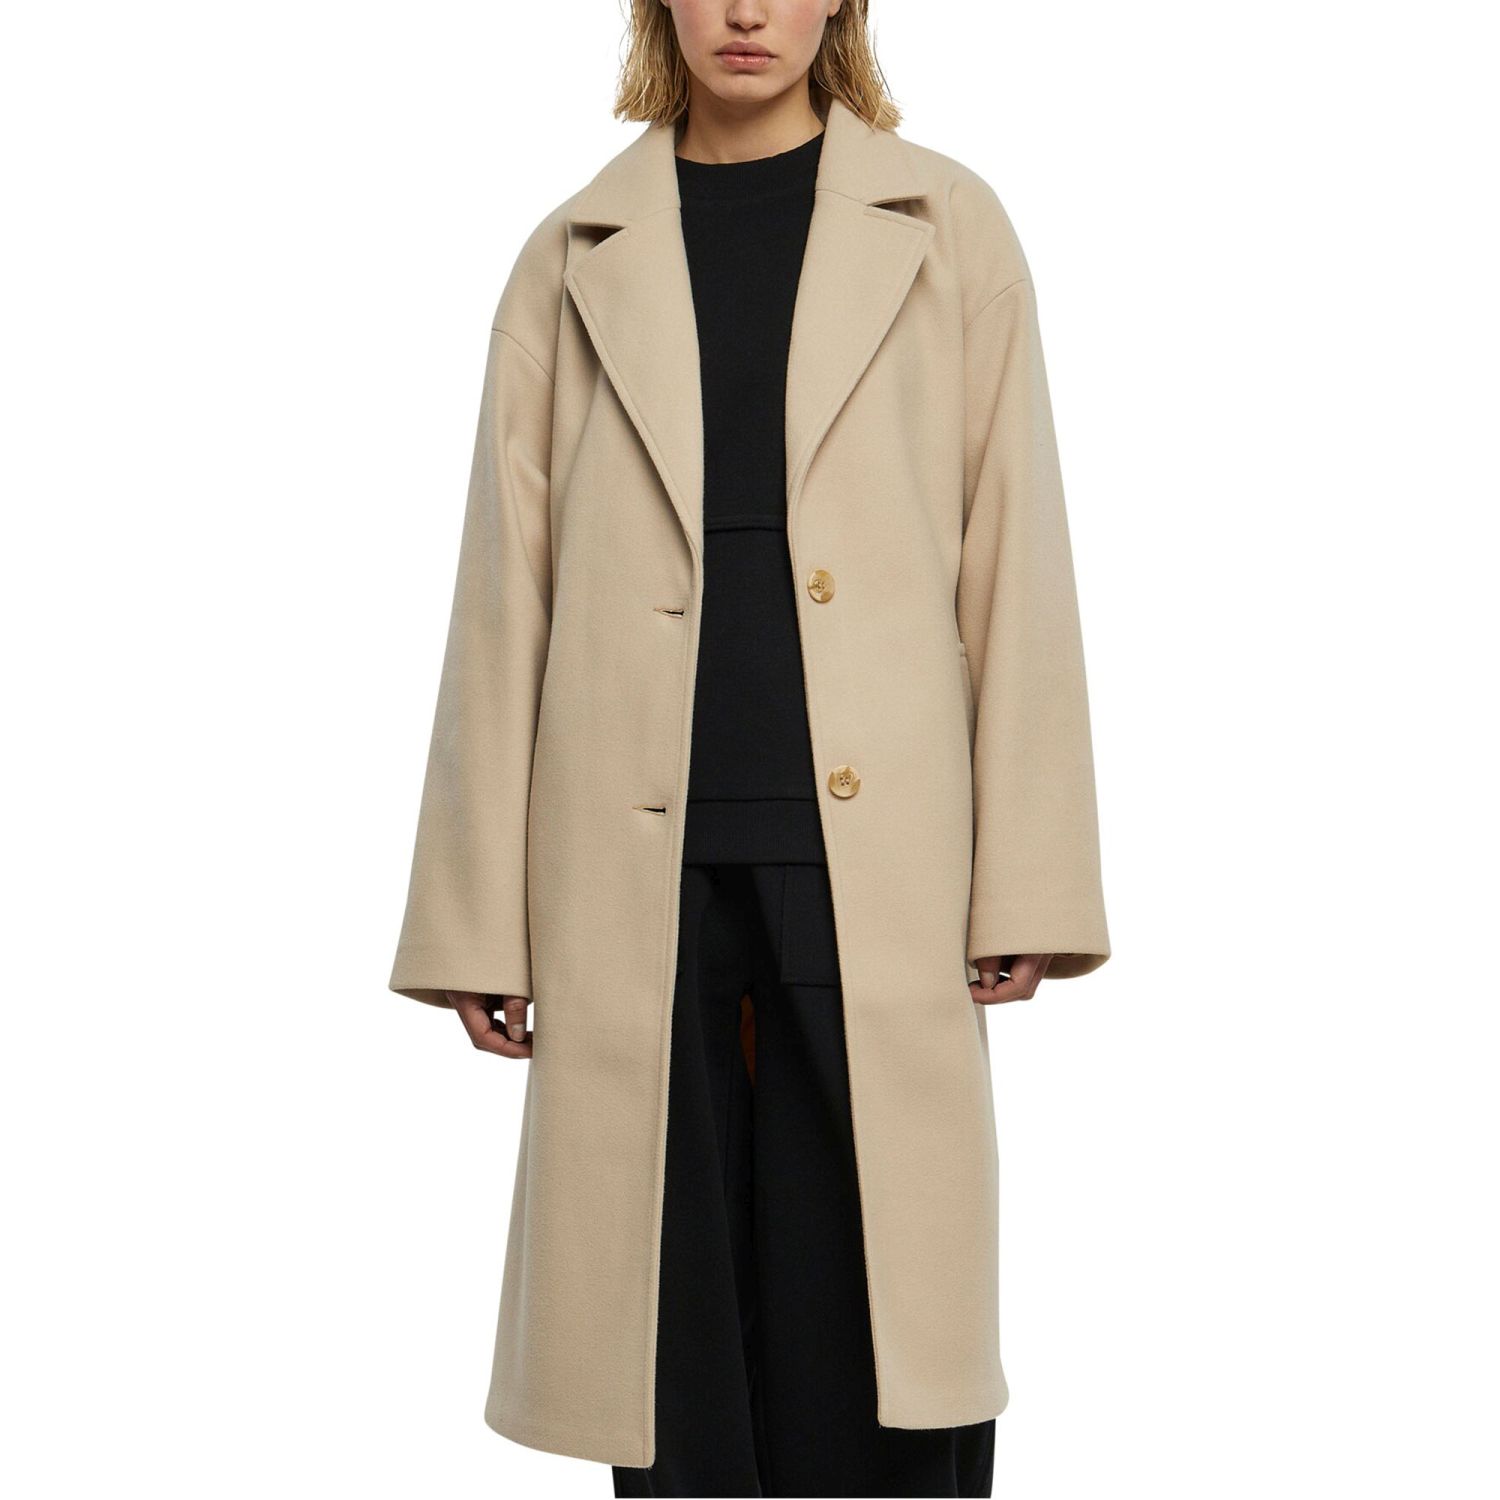 sand | STREET Jackets Classics Coat | Oversized | Winter URBAN Urban Jackets | Ladies EN WOMEN - Long